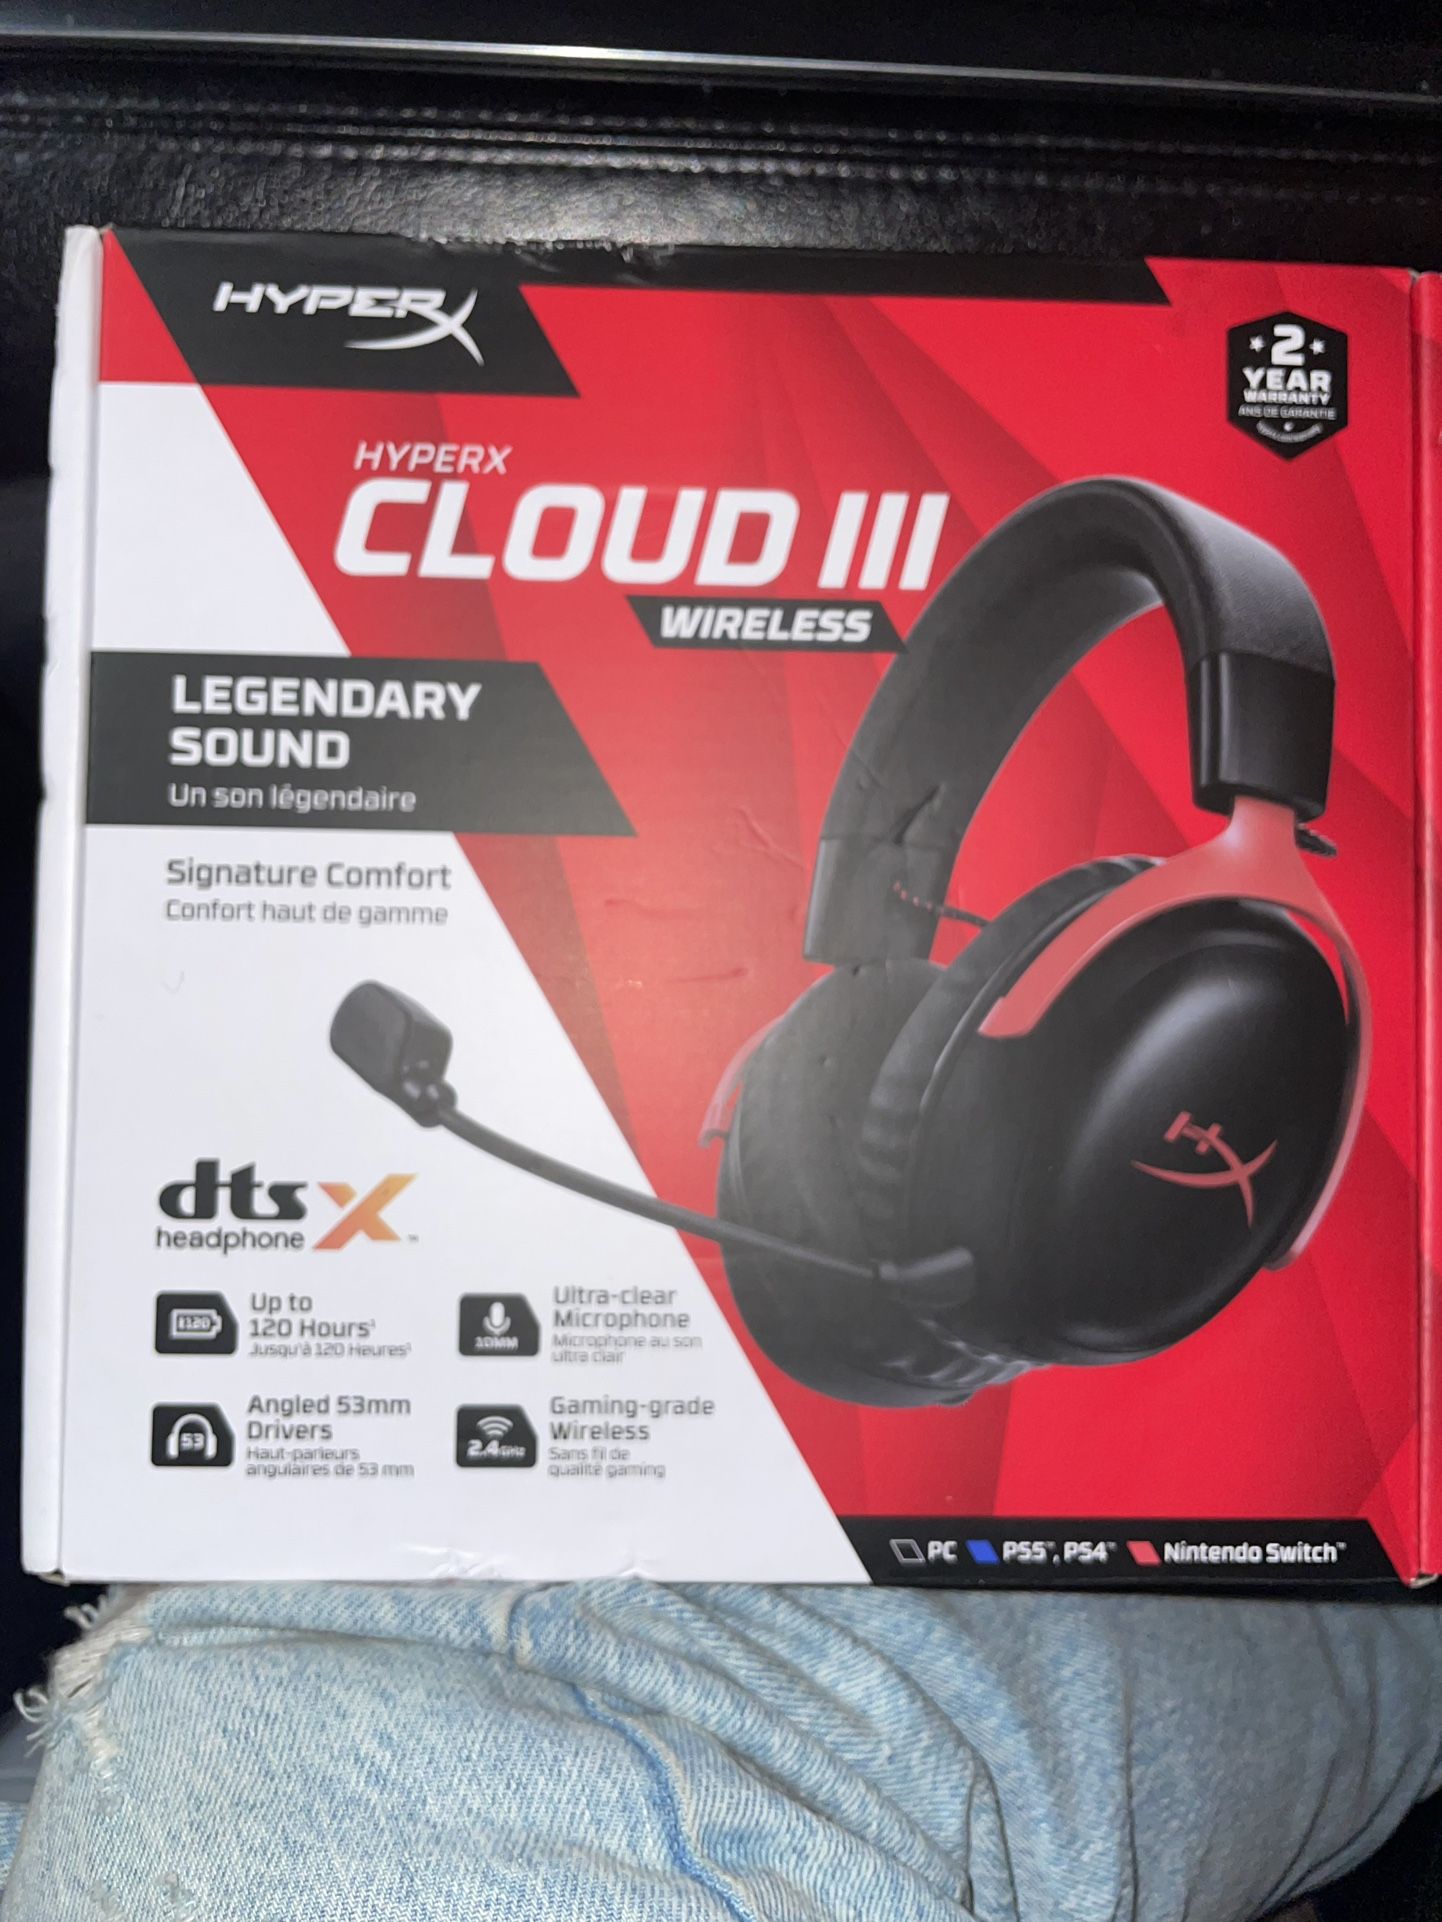 HYPERX CLOUD III Wireless Gaming Headset   LEGENDARY SOUND | SIGNATURE COMFORT